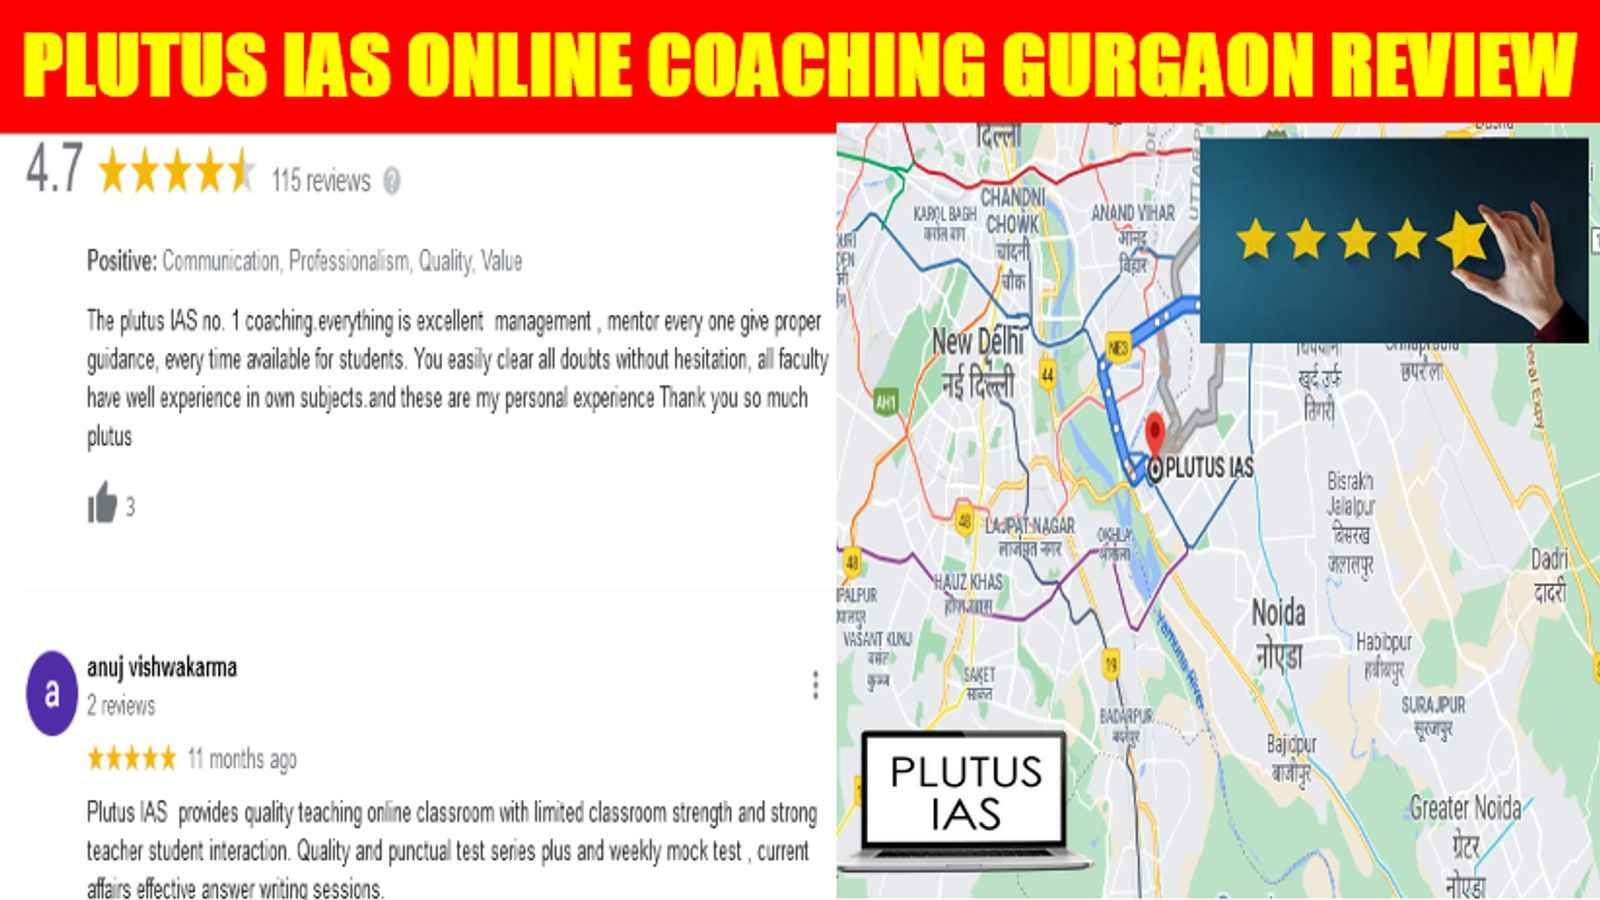 Plutus IAS Online Coaching Gurgaon Review